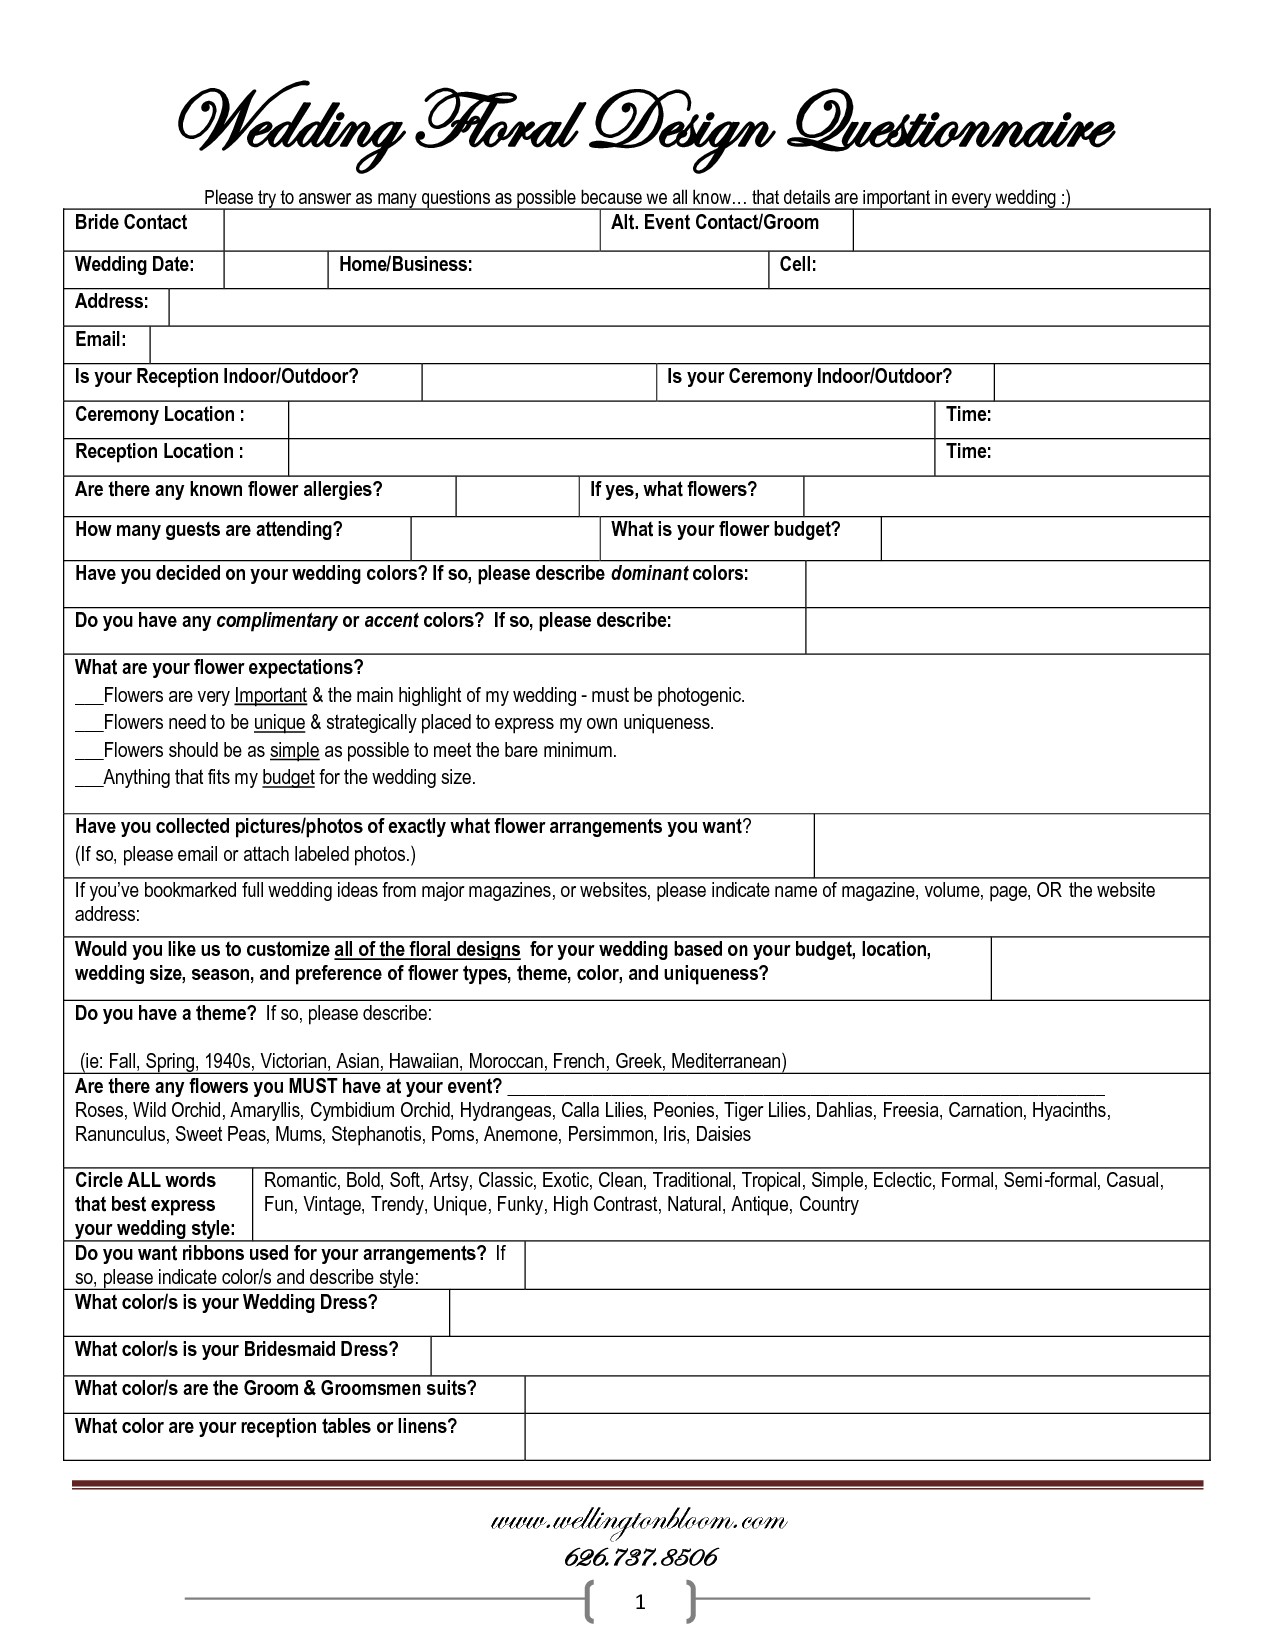 Wedding Planner Questionnaire Template Google Search Document Florist